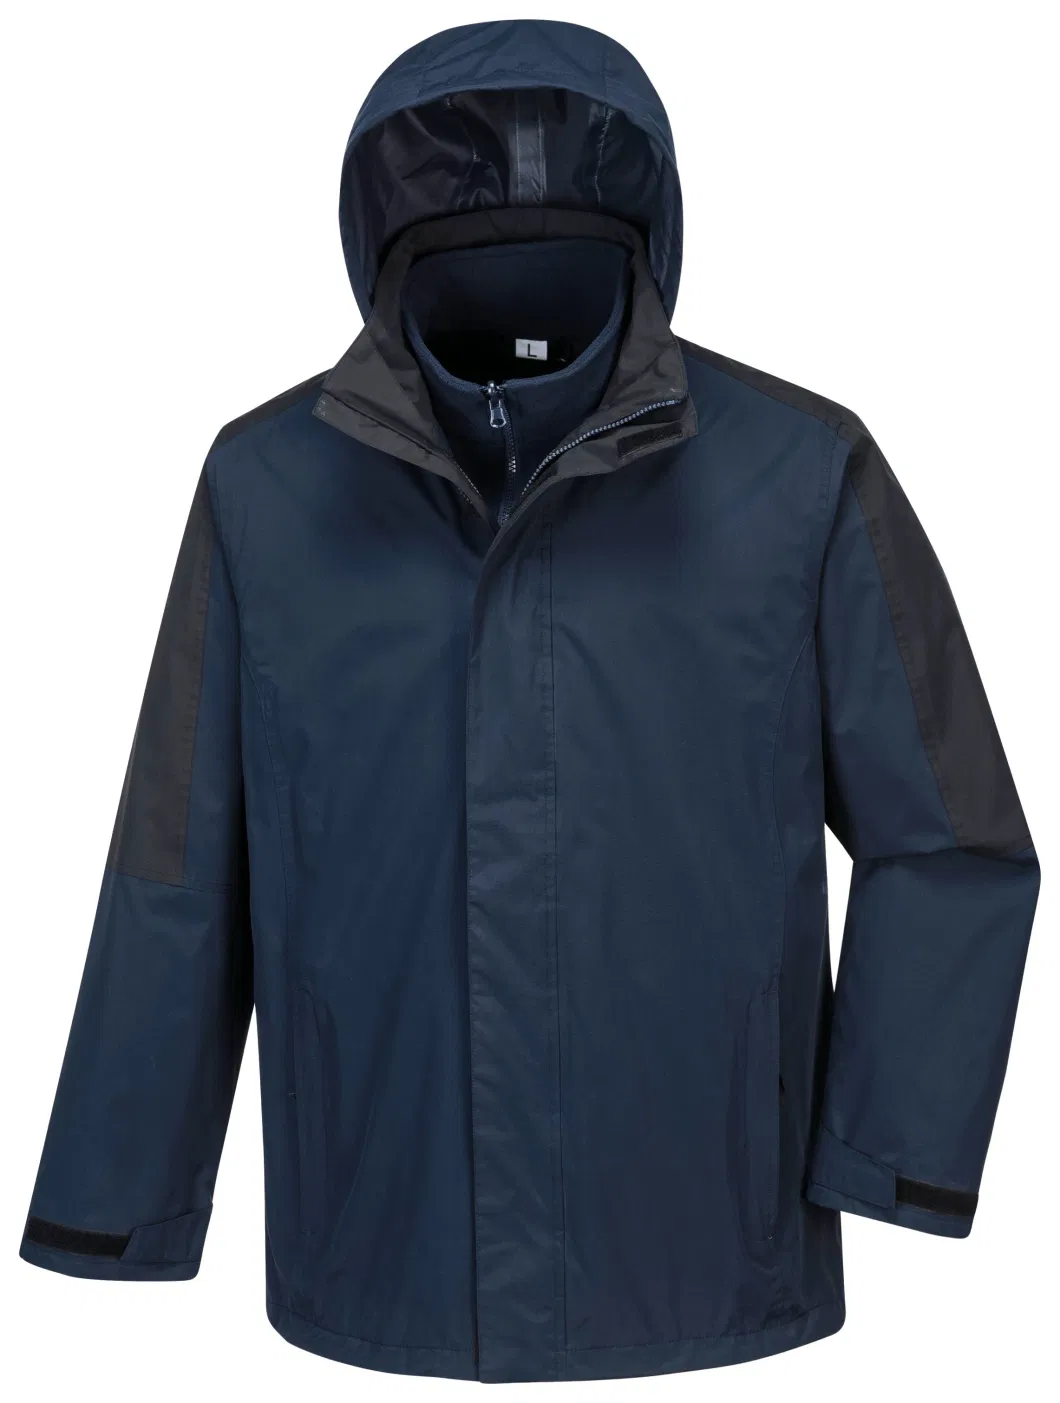 OEM Polyester Full Zipper Jacket Winter Mens 3 in 1 Water Repellent Hiking Jacket